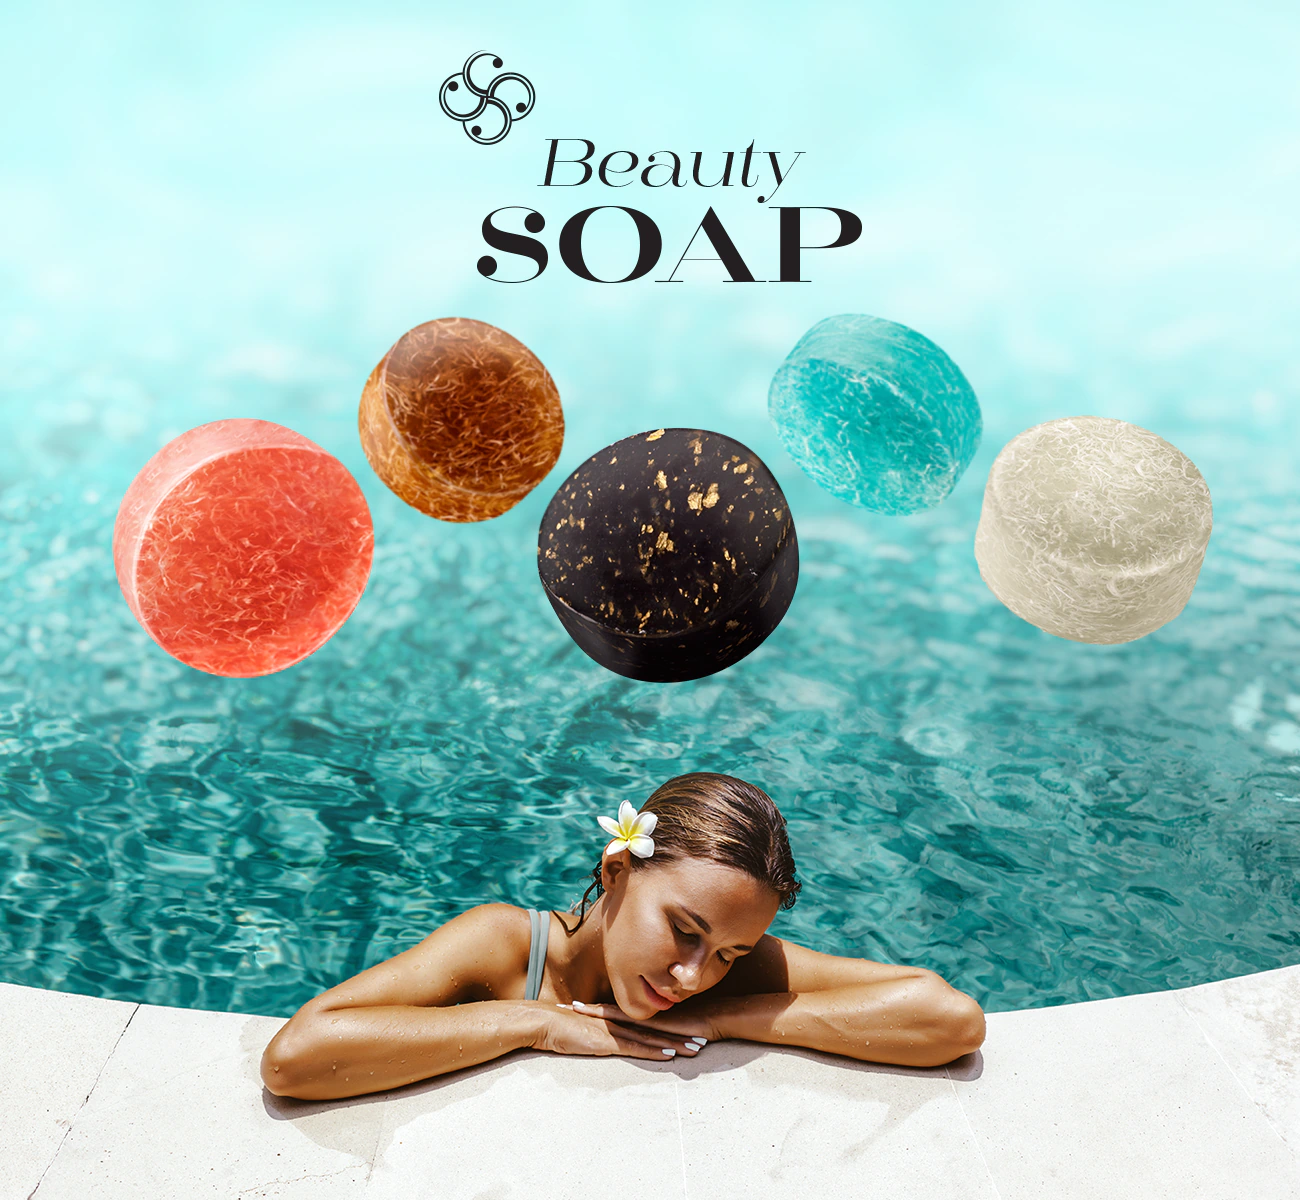 BeautySoap Header Sky Resources Beauty Soap